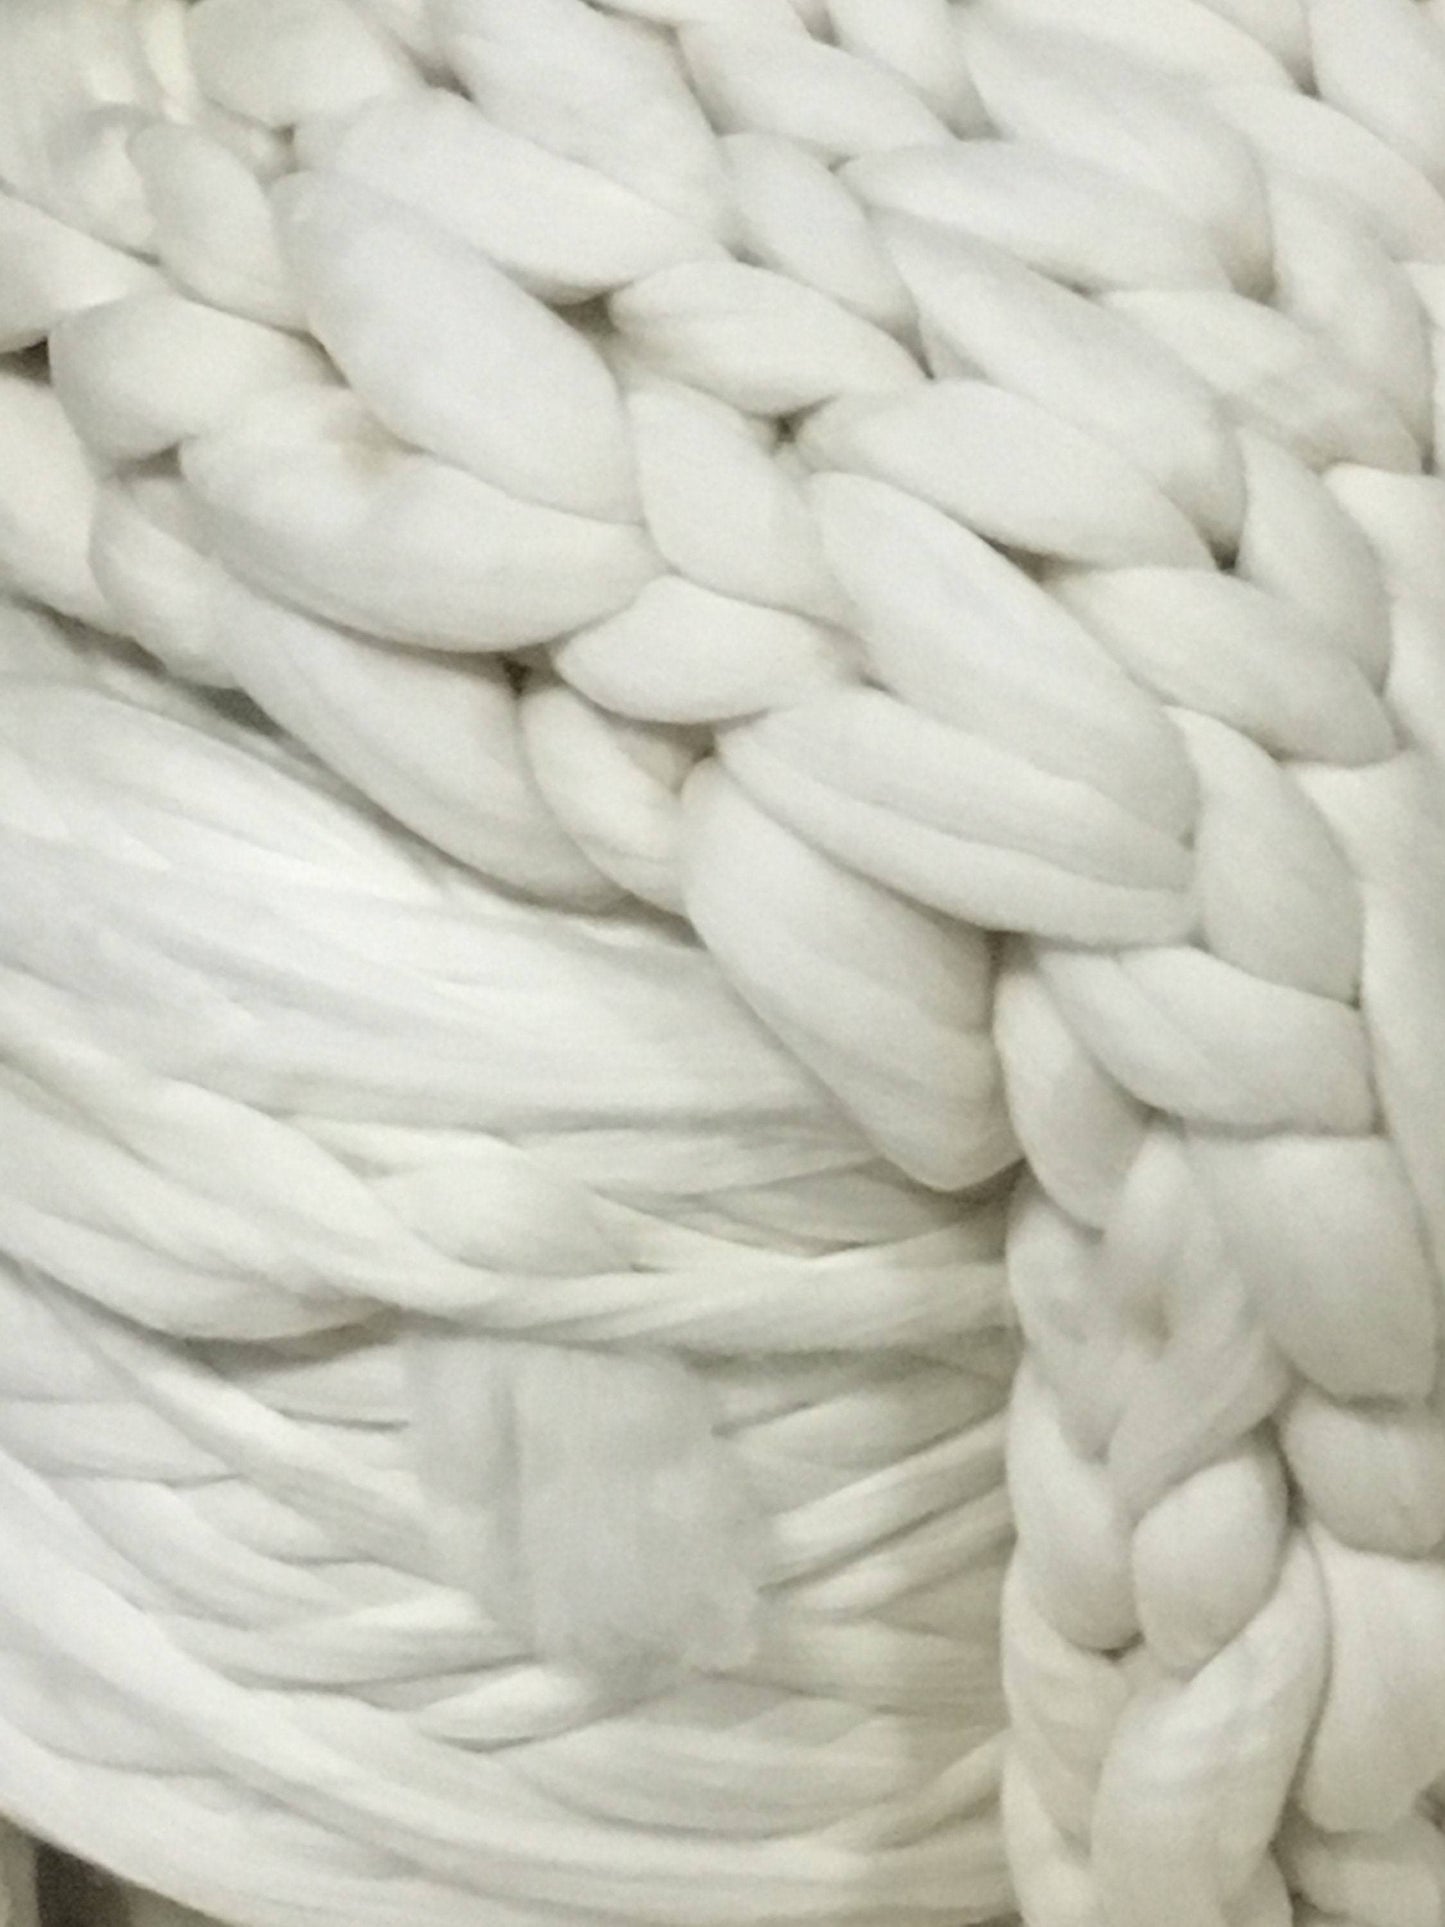 8 lbs Pounds White Wool Roving Chunky Yarn, Jumbo Yarn, Big Yarn, Giant Yarn  to